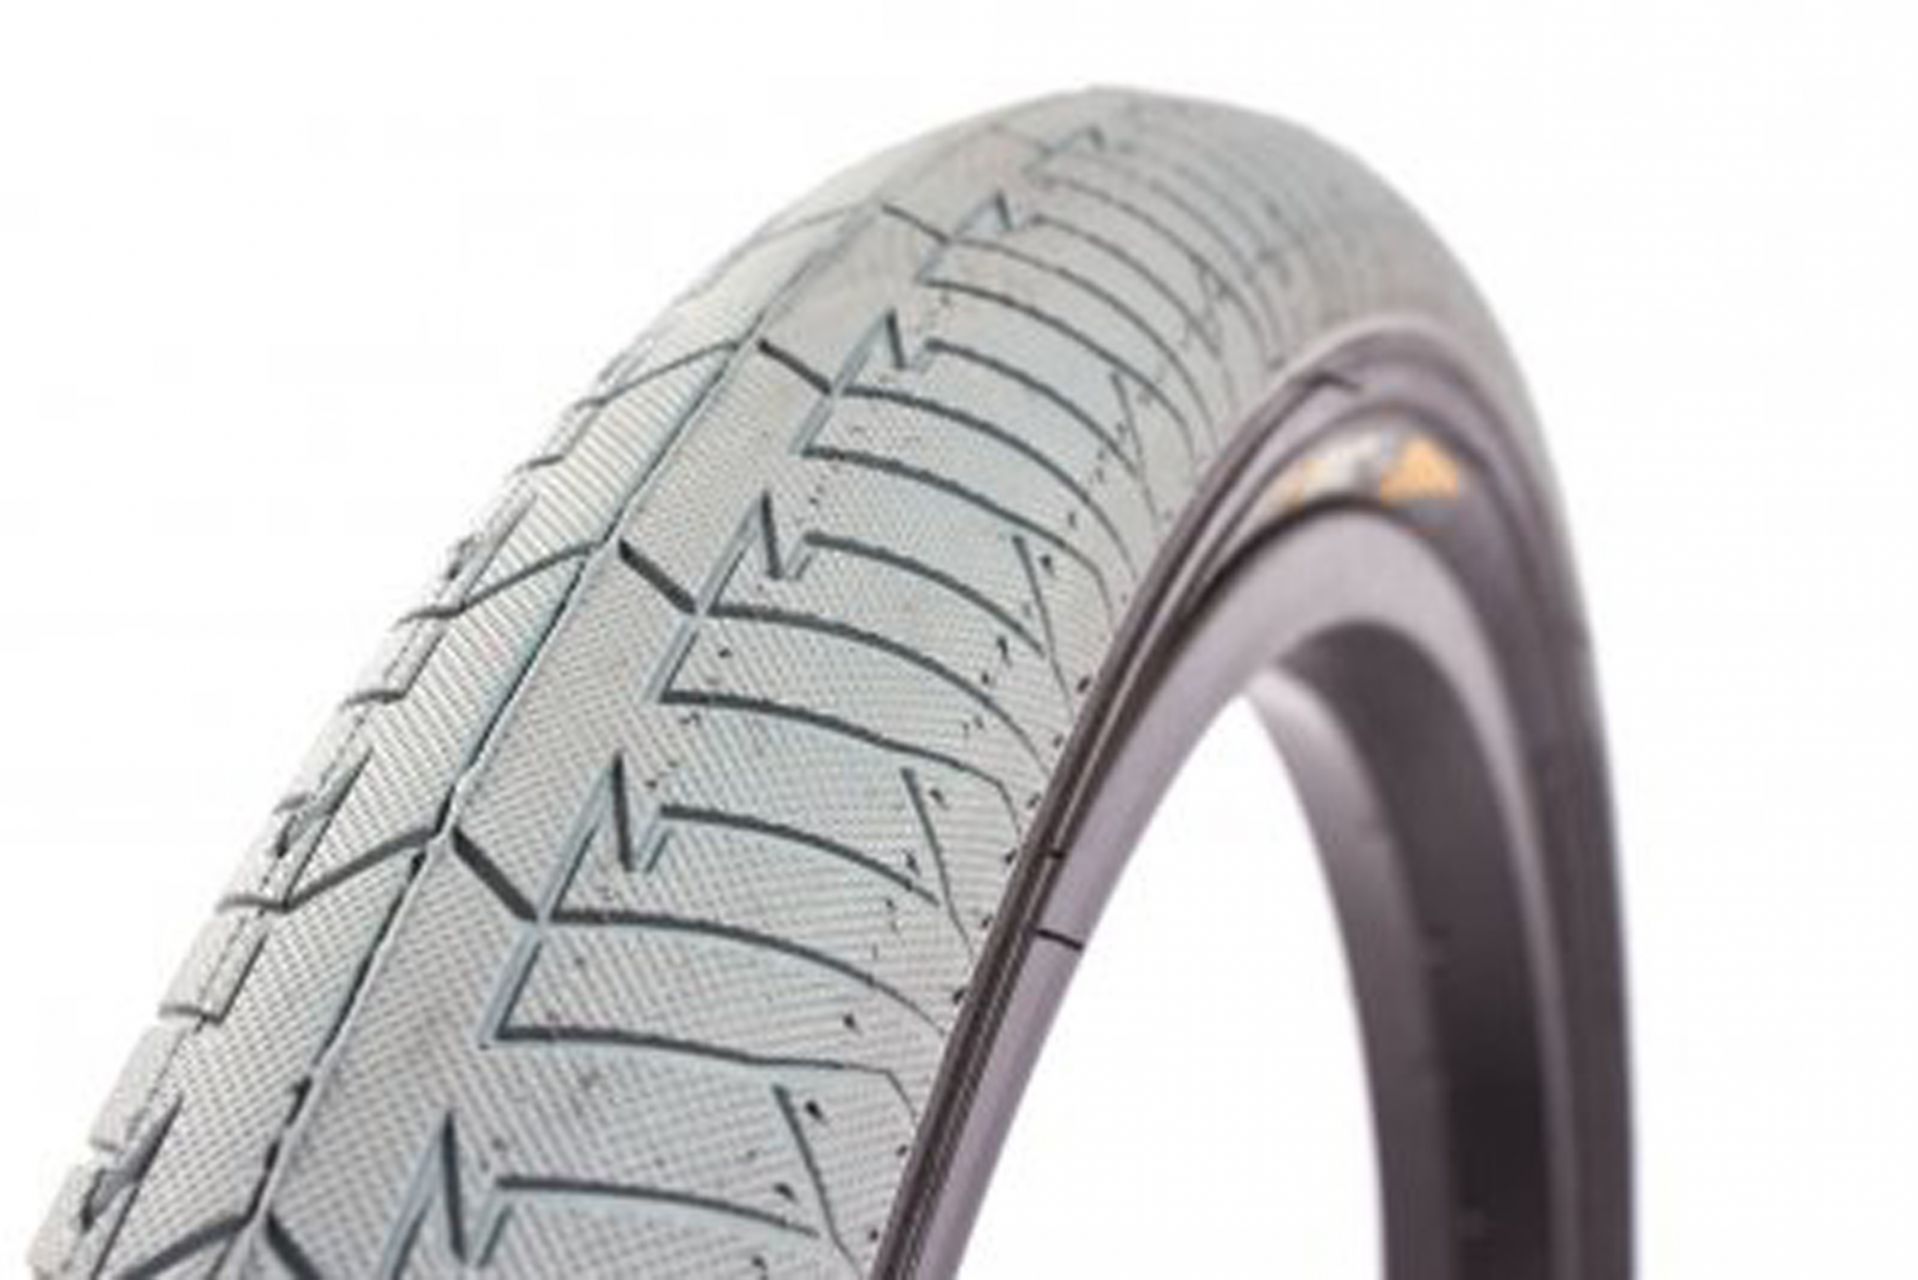 KHE | BMX | Tire MAC2+ - grau-schwarz - 20" x 2,3 PARK-STREET E10